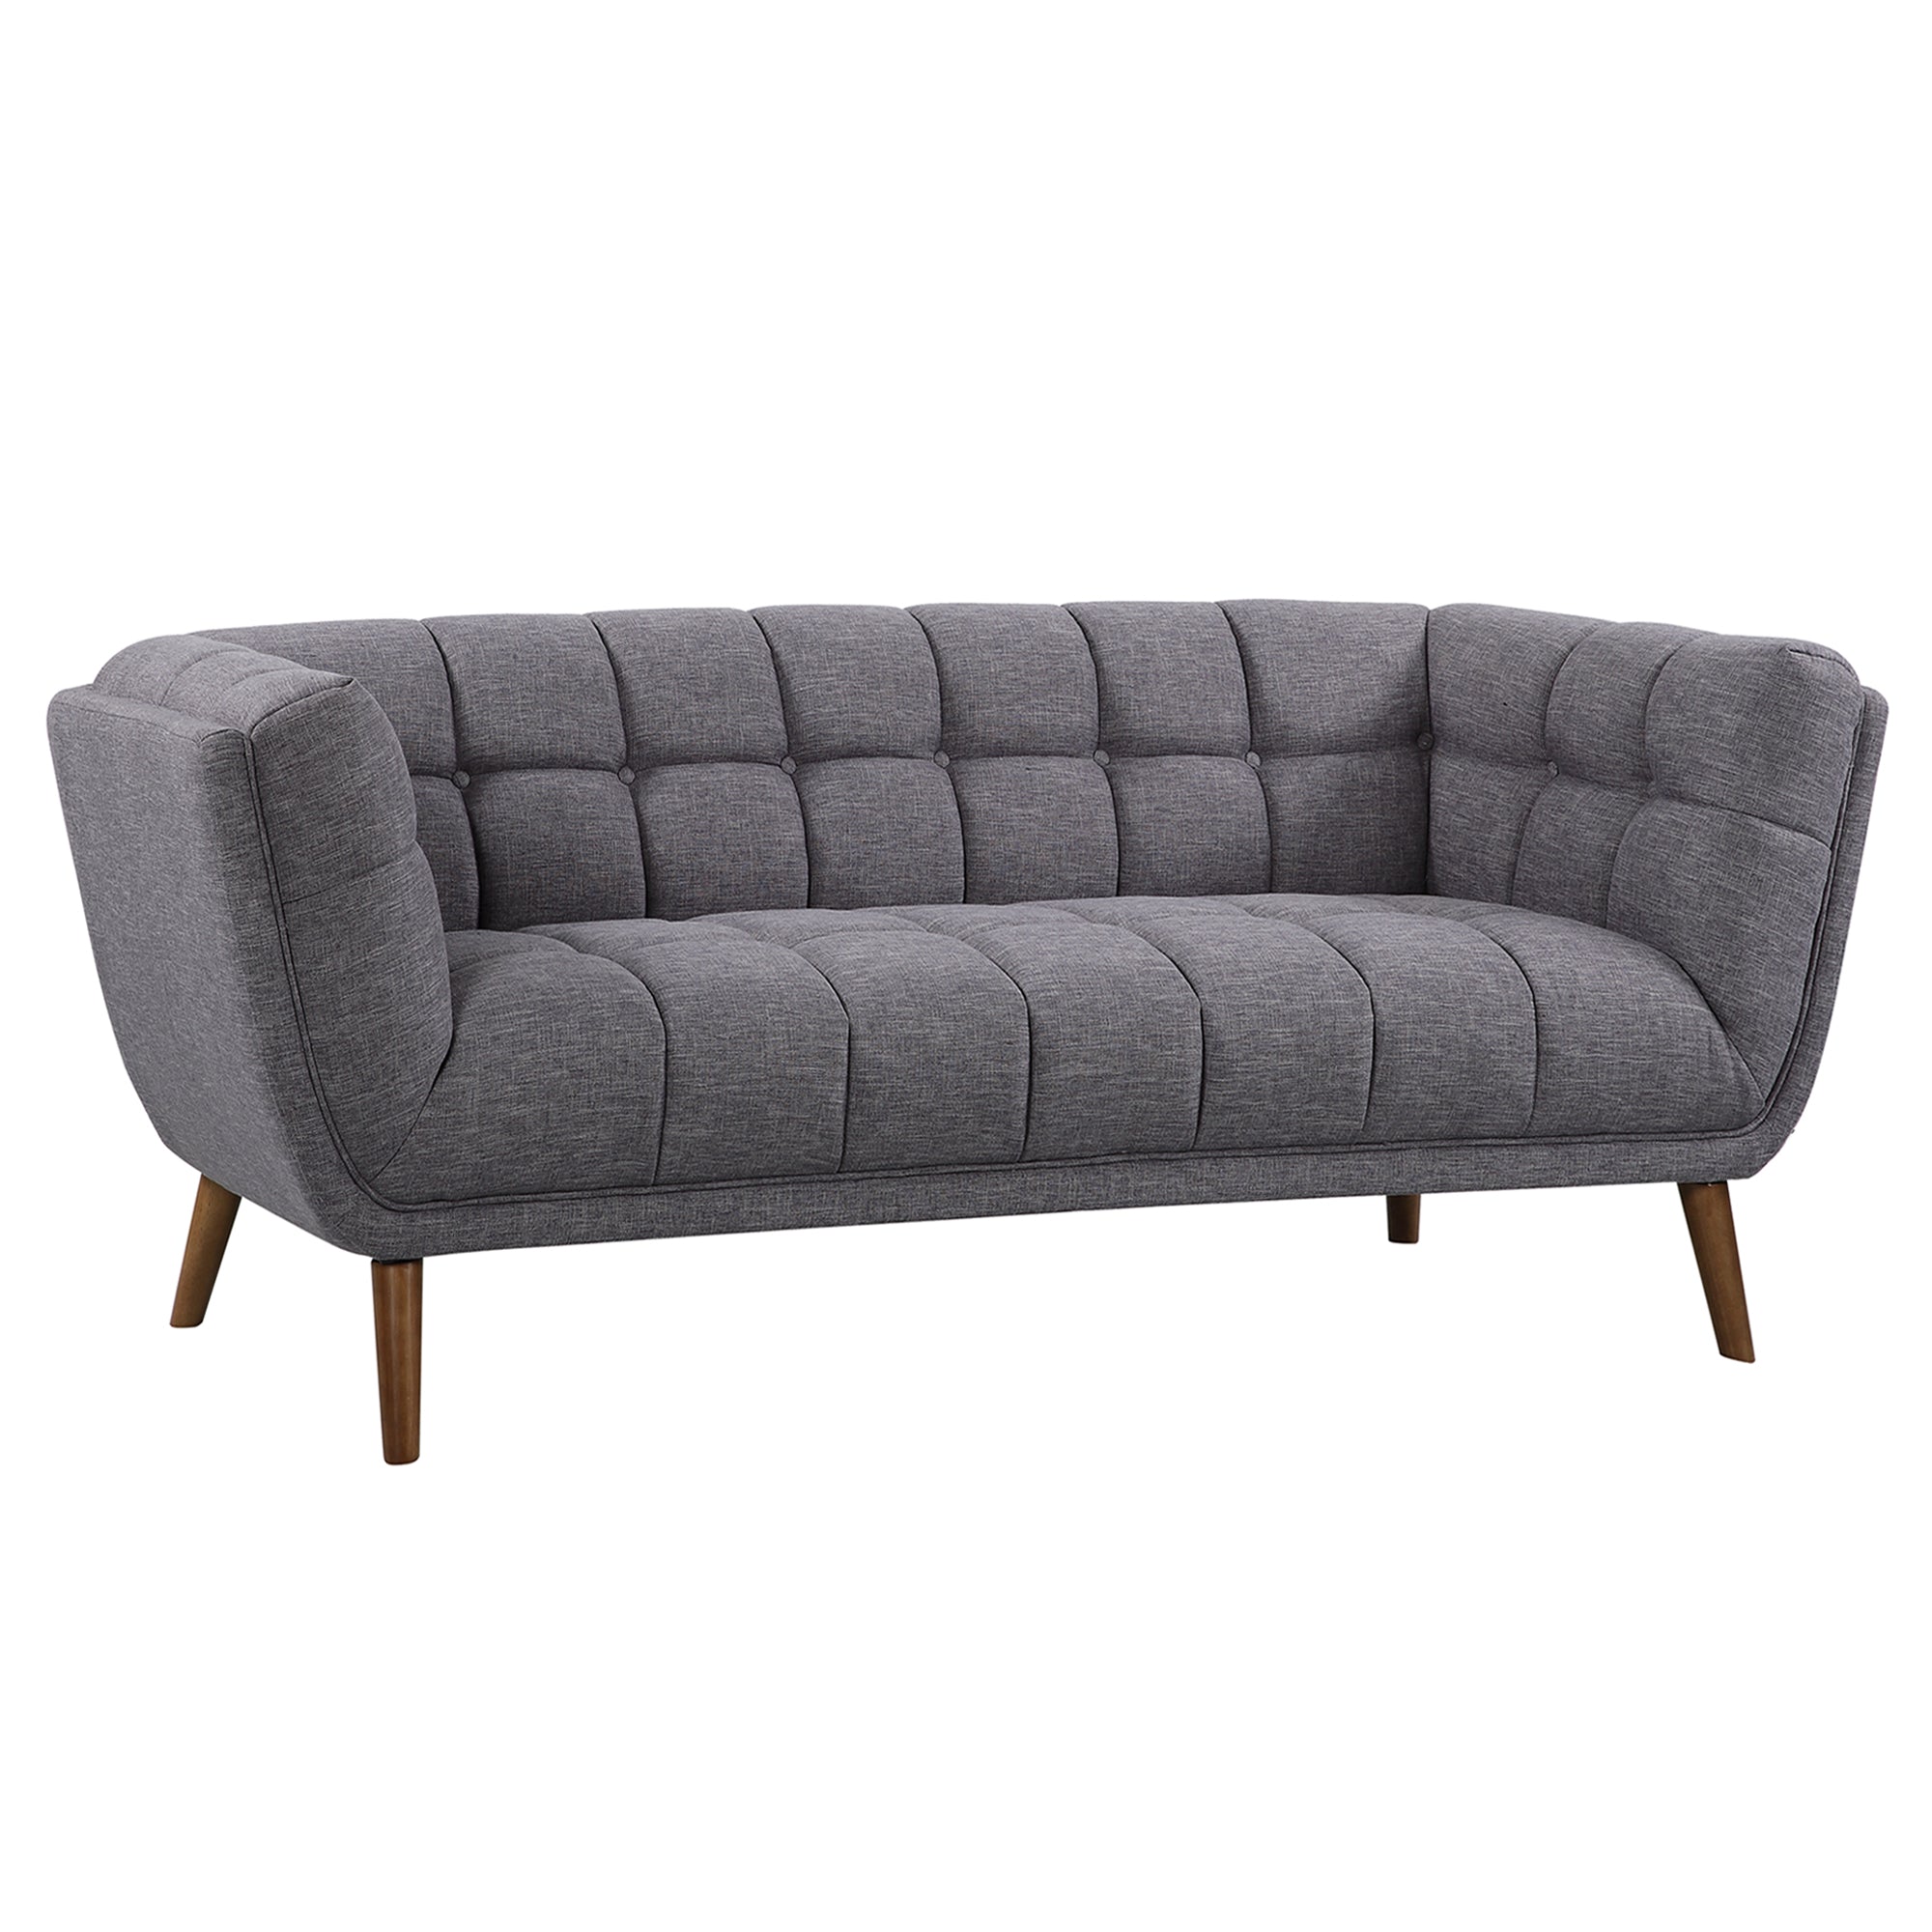 Armen Living Lcph3dg Phantom Mid-century Modern Sofa In Dark Gray Linen And Walnut Legs